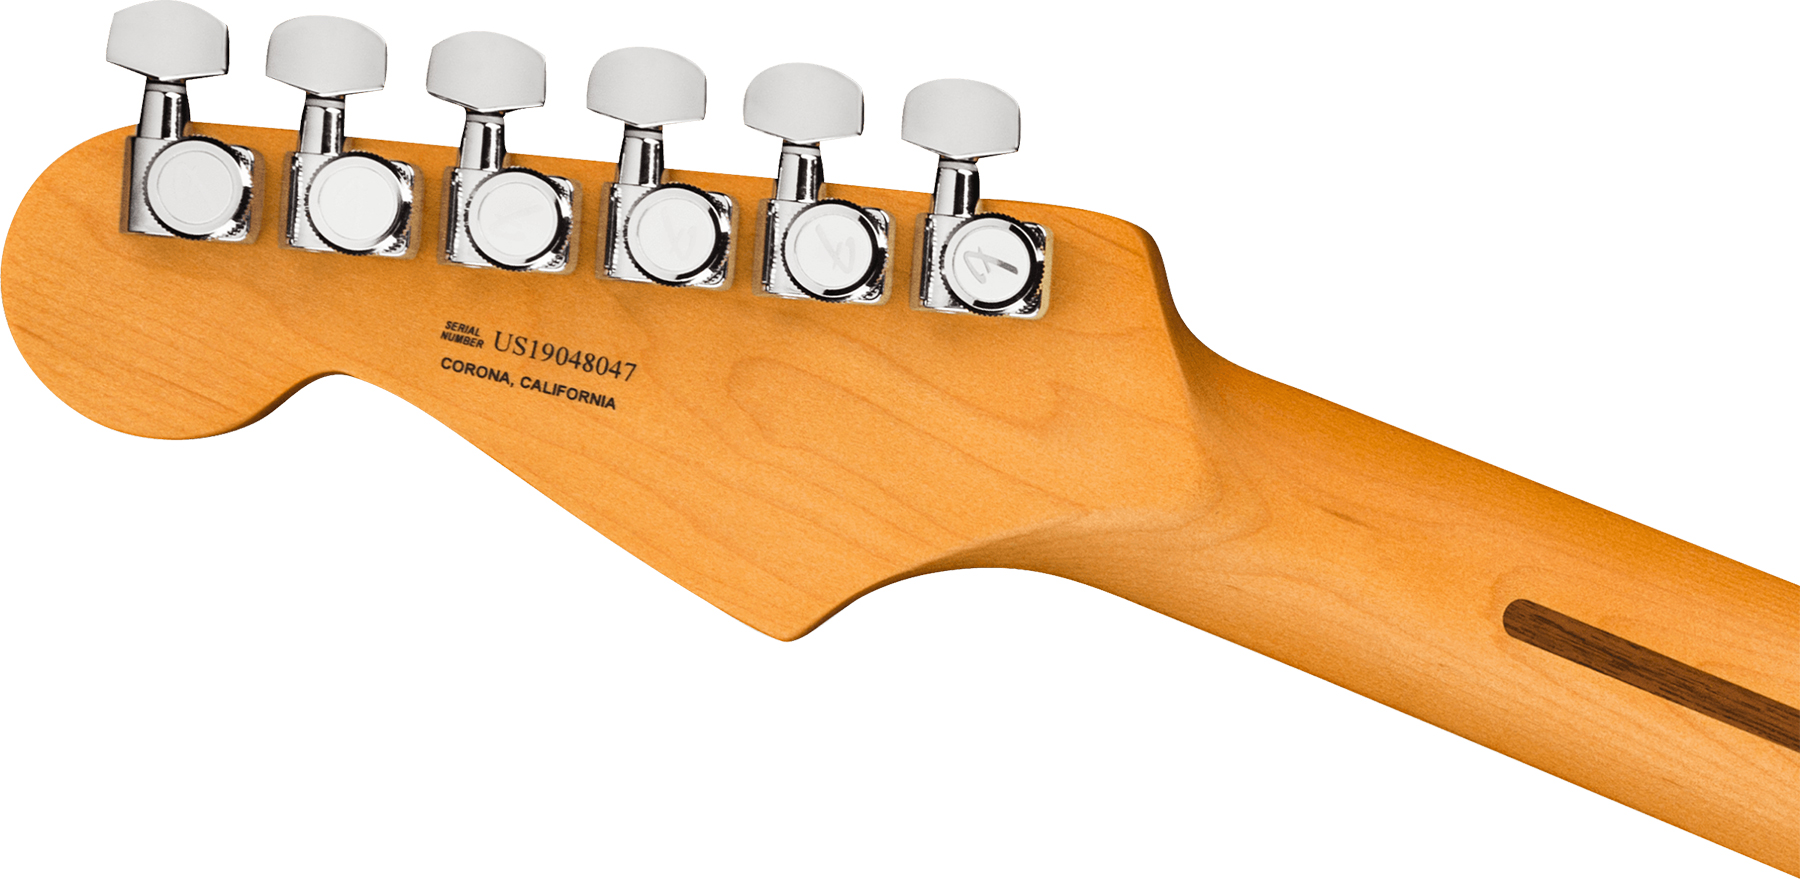 Fender Strat American Ultra 2019 Usa Rw - Ultraburst - Guitare Électrique Forme Str - Variation 3